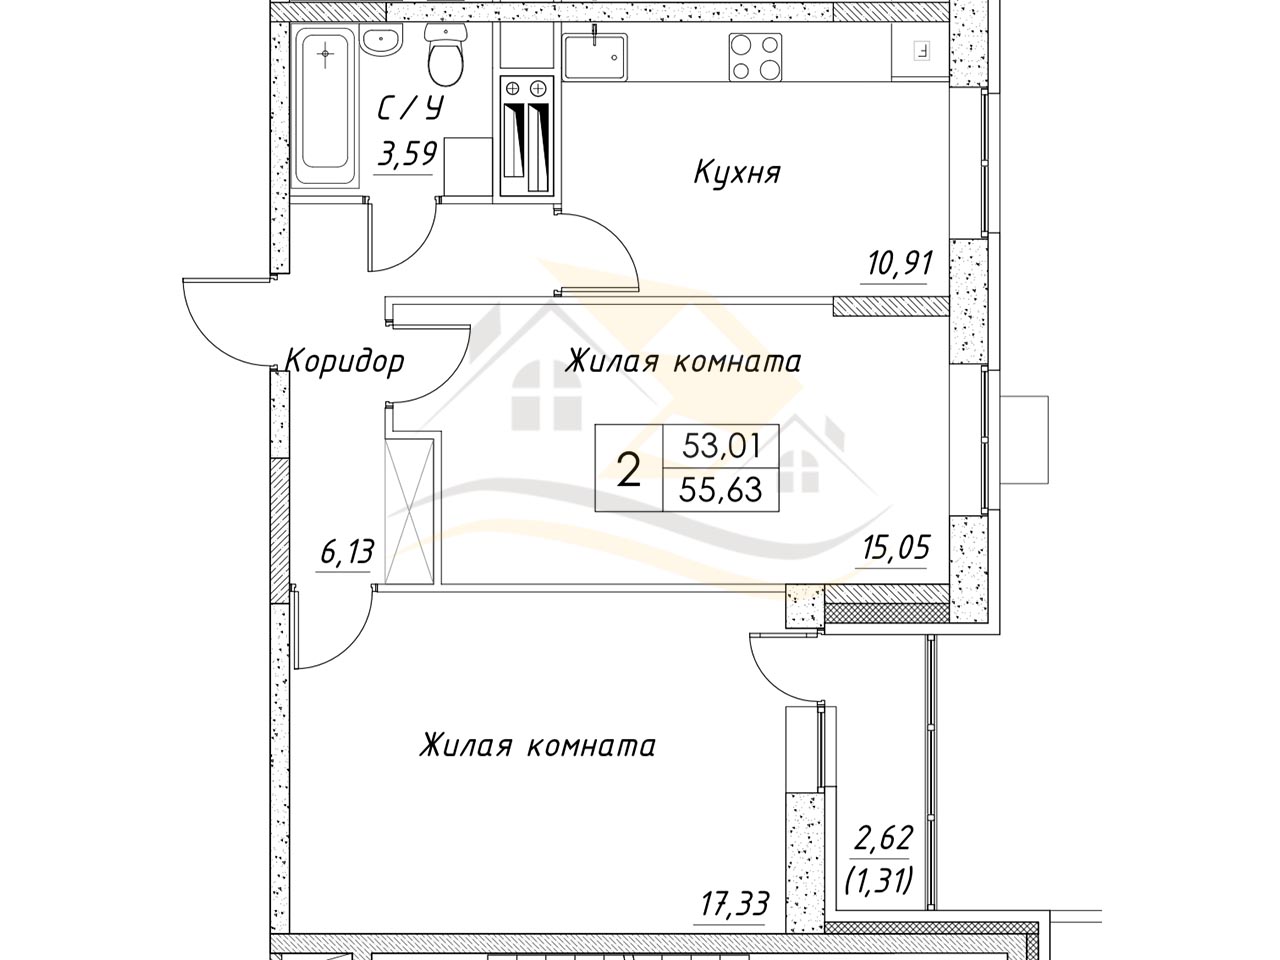 2-х комнатная квартира 55.6 кв. м. в строящемся 14-ти этажном доме ЖК «Шоколад» / 6070000 руб. / КварталСити